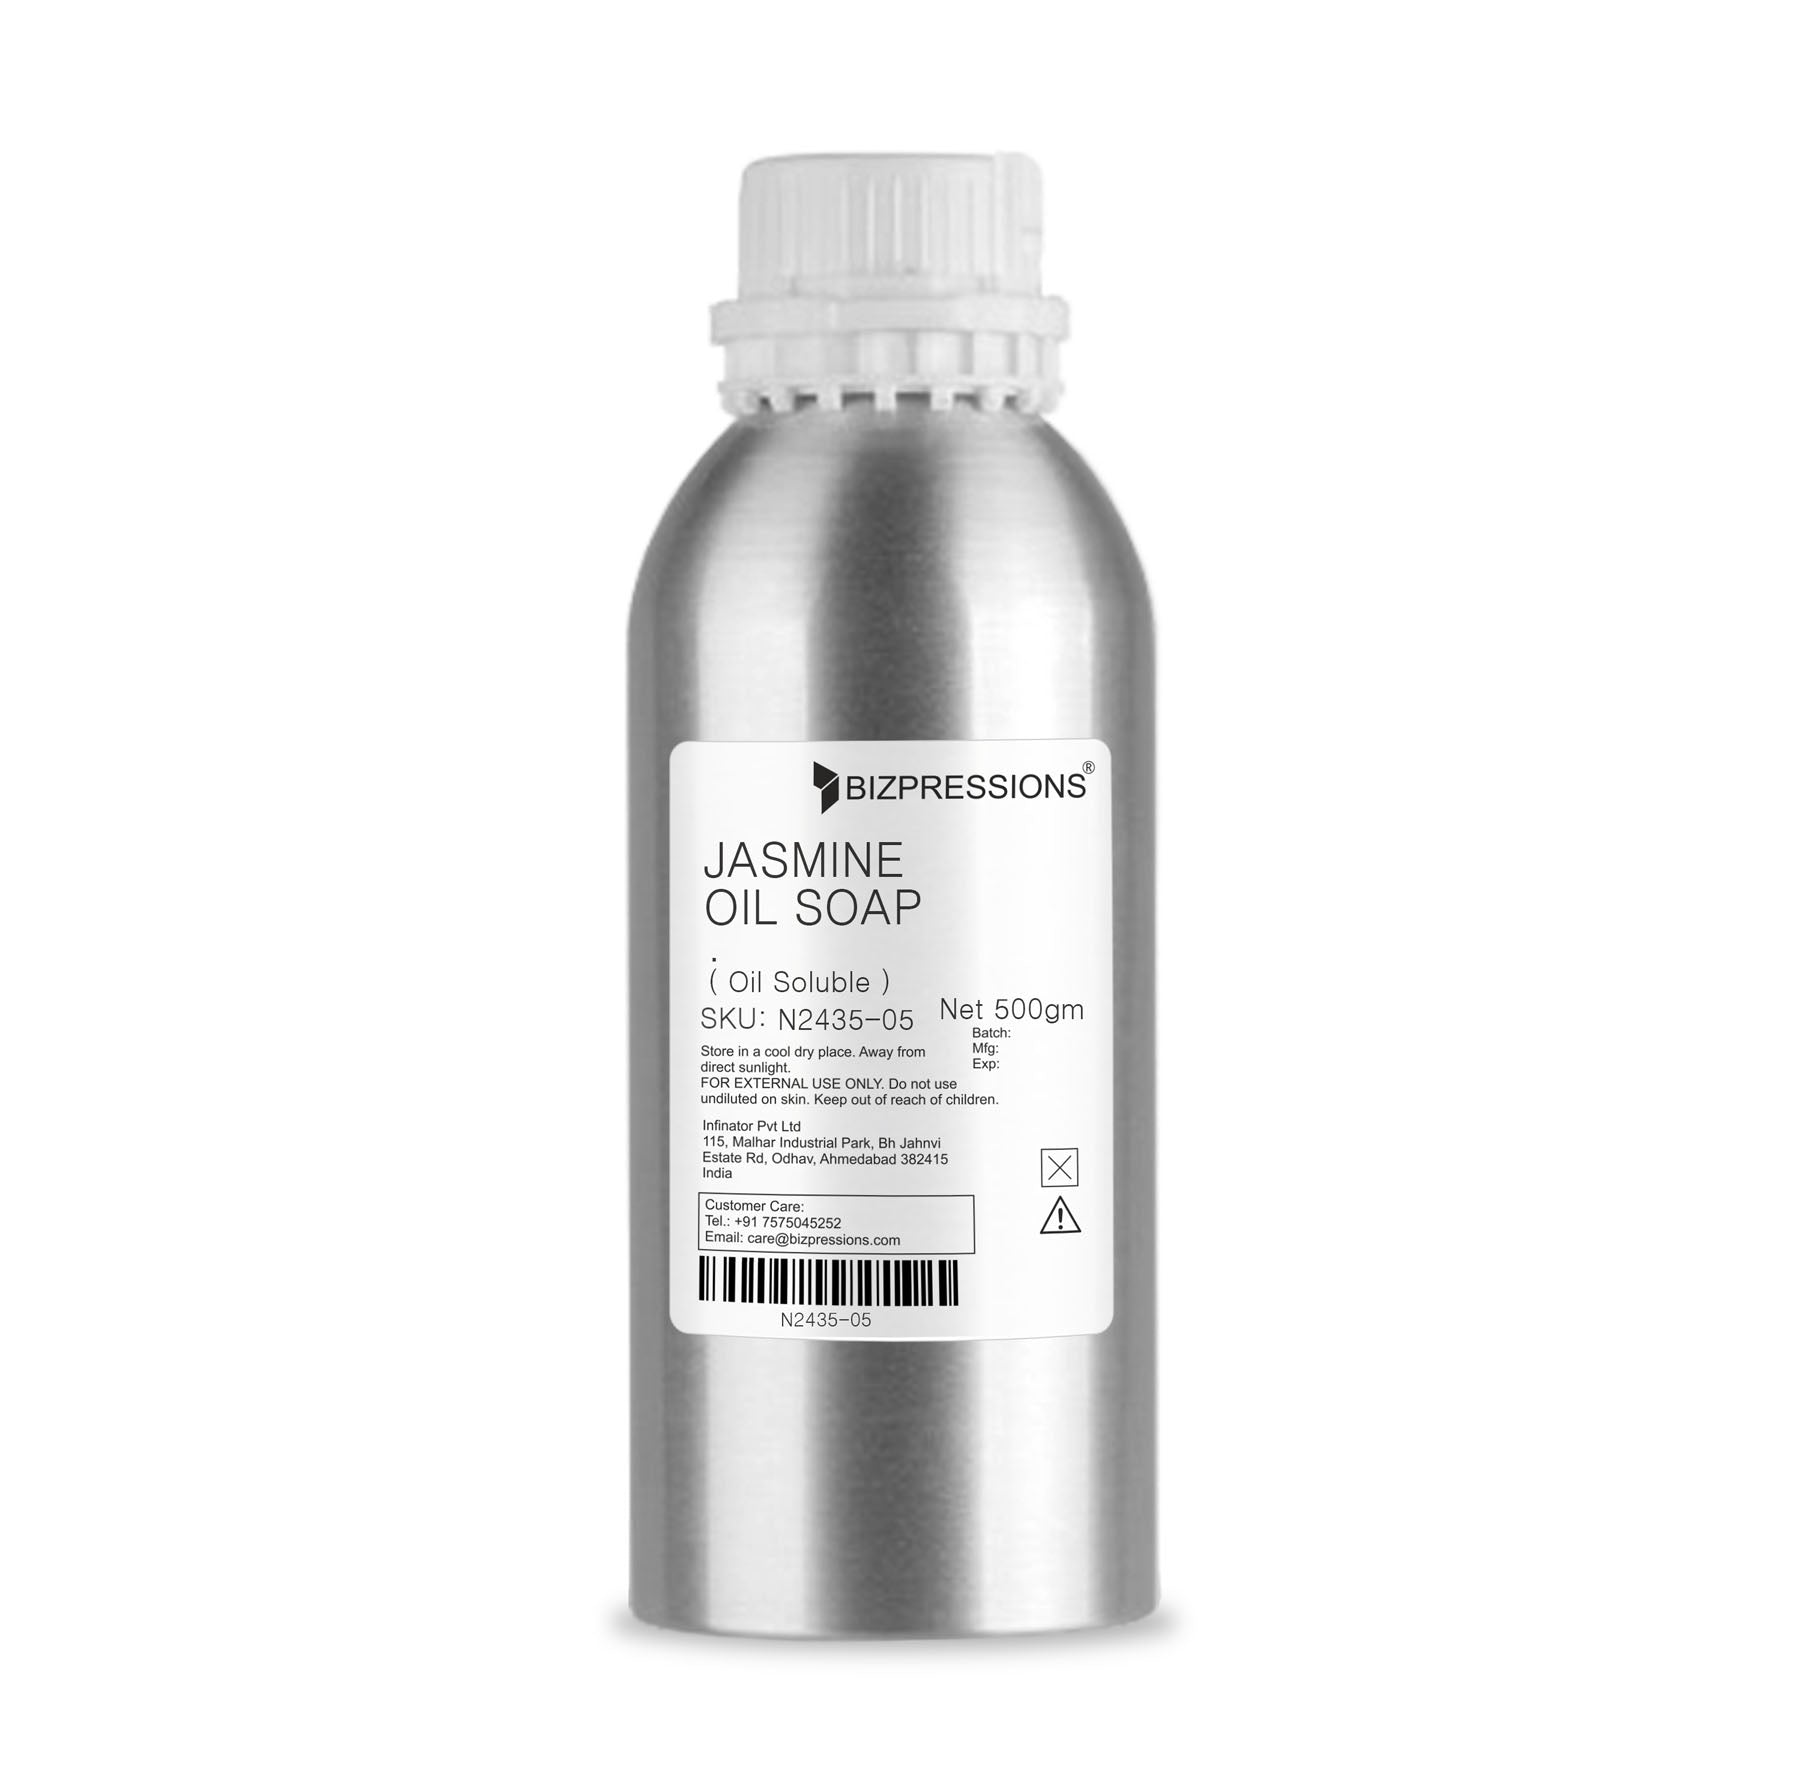 JASMINE OIL SOAP - Fragrance ( Oil Soluble ) - 500 gm